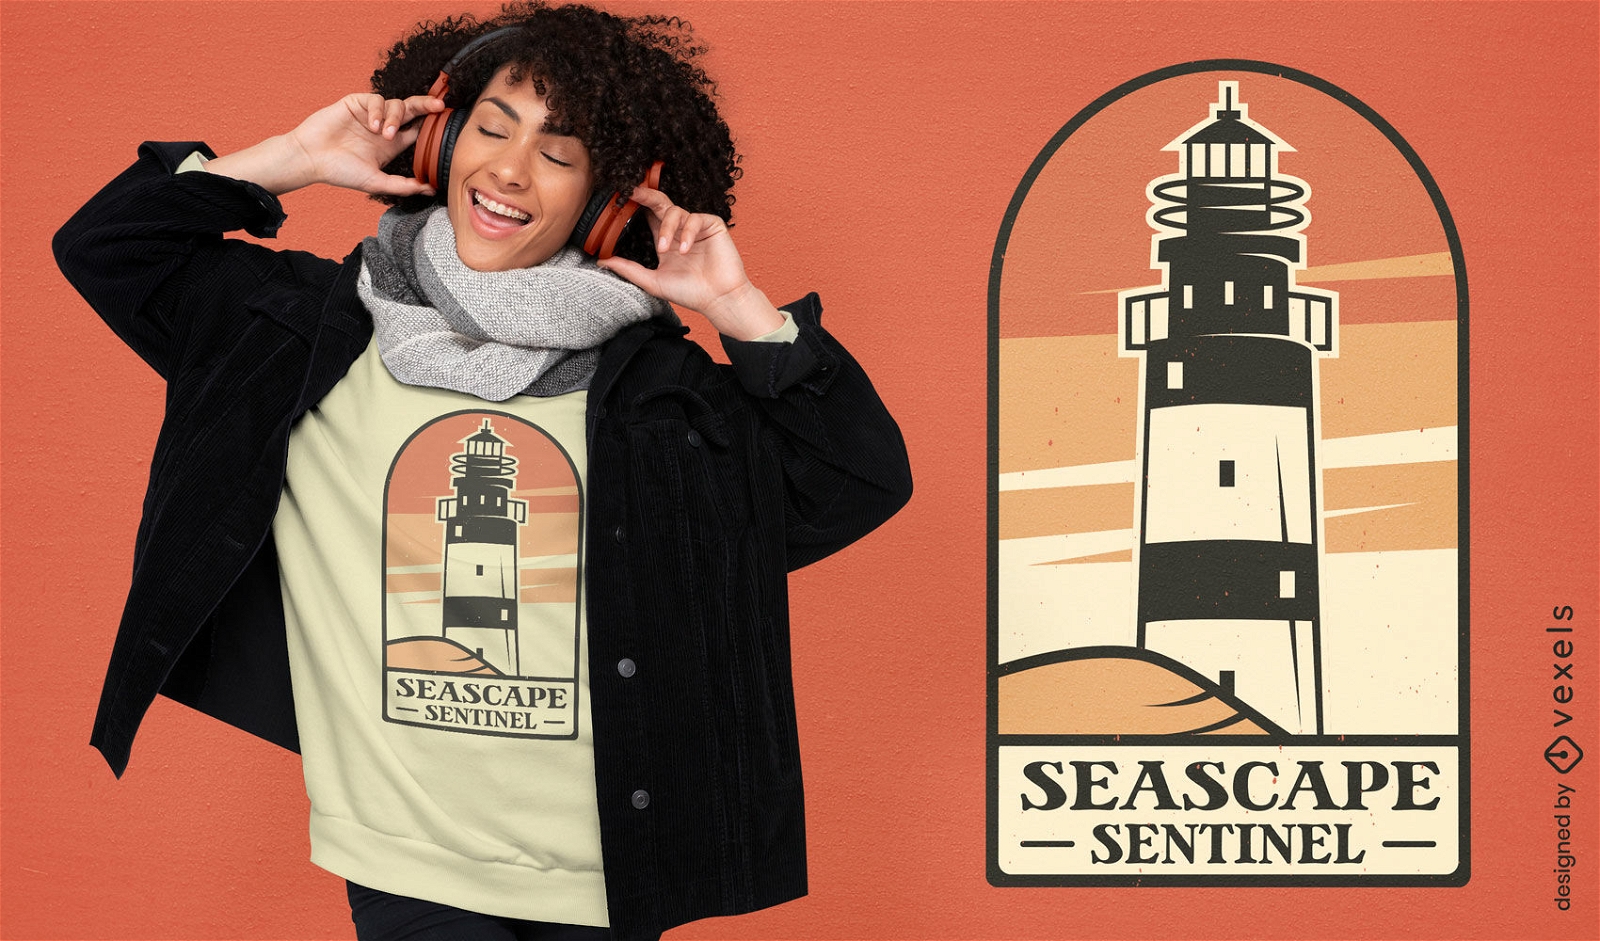 Seascape seaside lighthouse t-shirt design